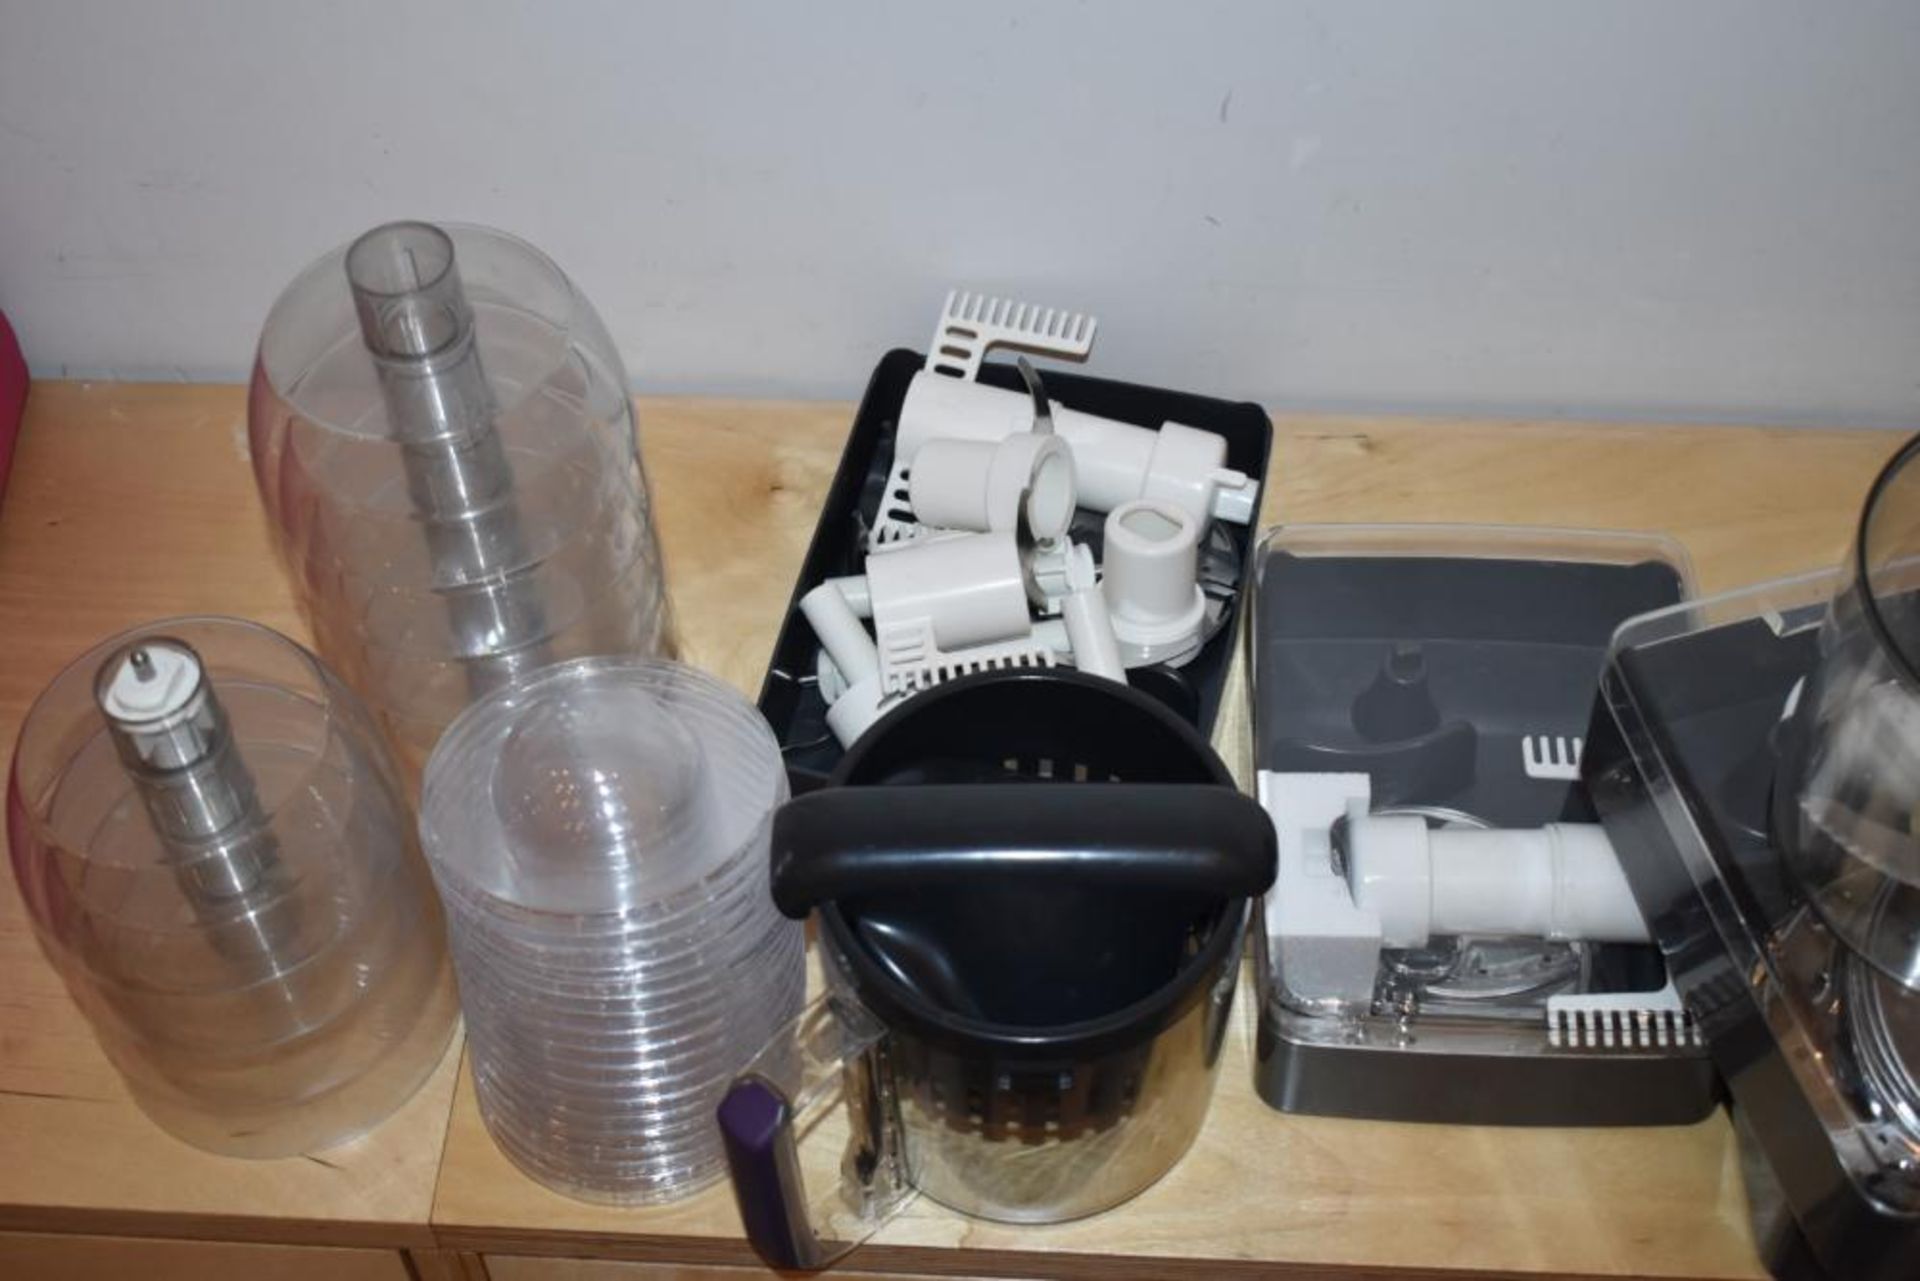 3 x Megamix Mini Plus Food Mixer With Accessories - Model 18240 - CL489 - Location: Putney, - Image 6 of 9